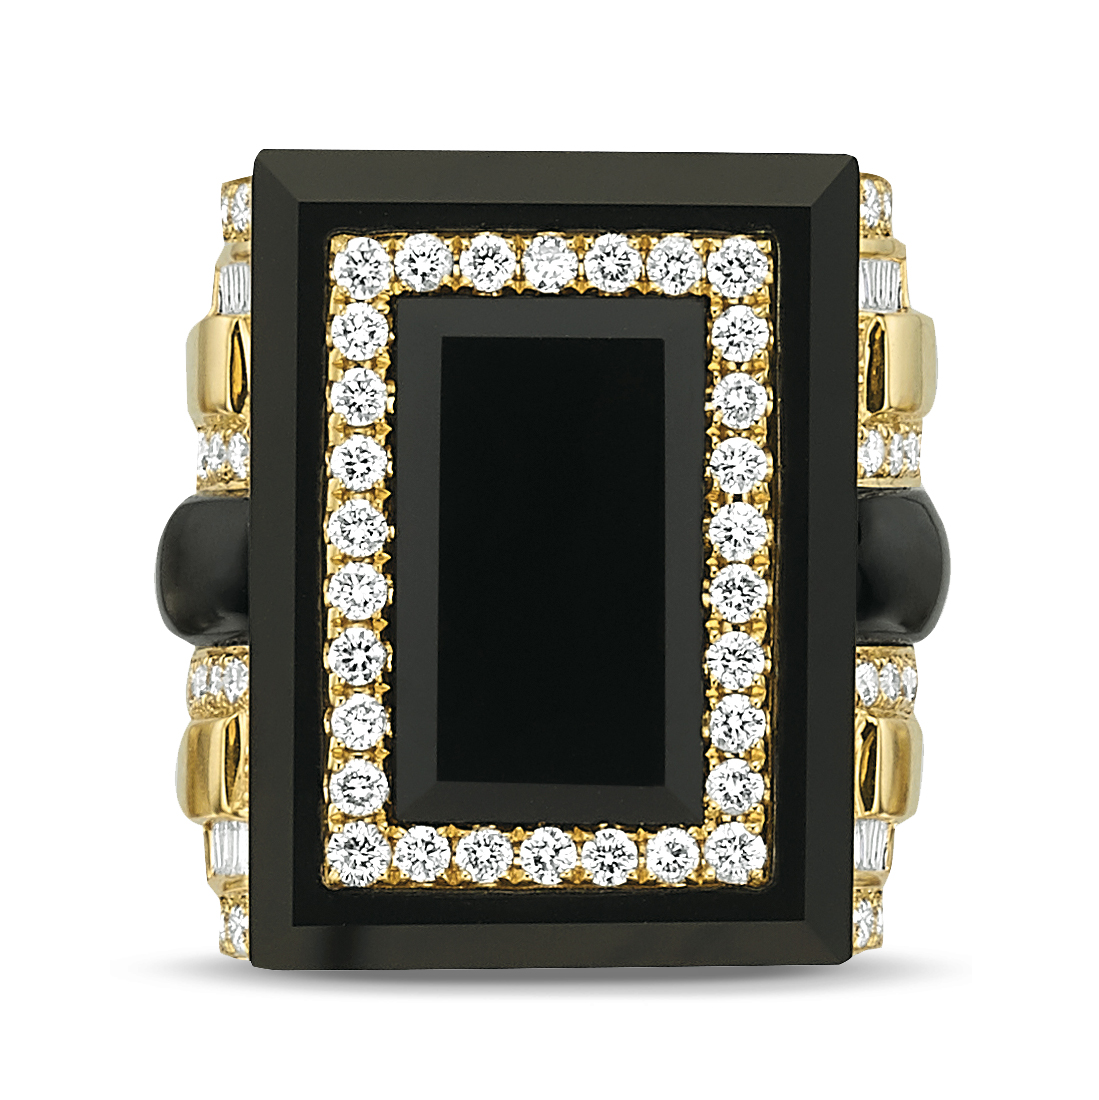 18K Yellow Gold Onyx Fashion Ring Venus Jewelers Somerset, NJ